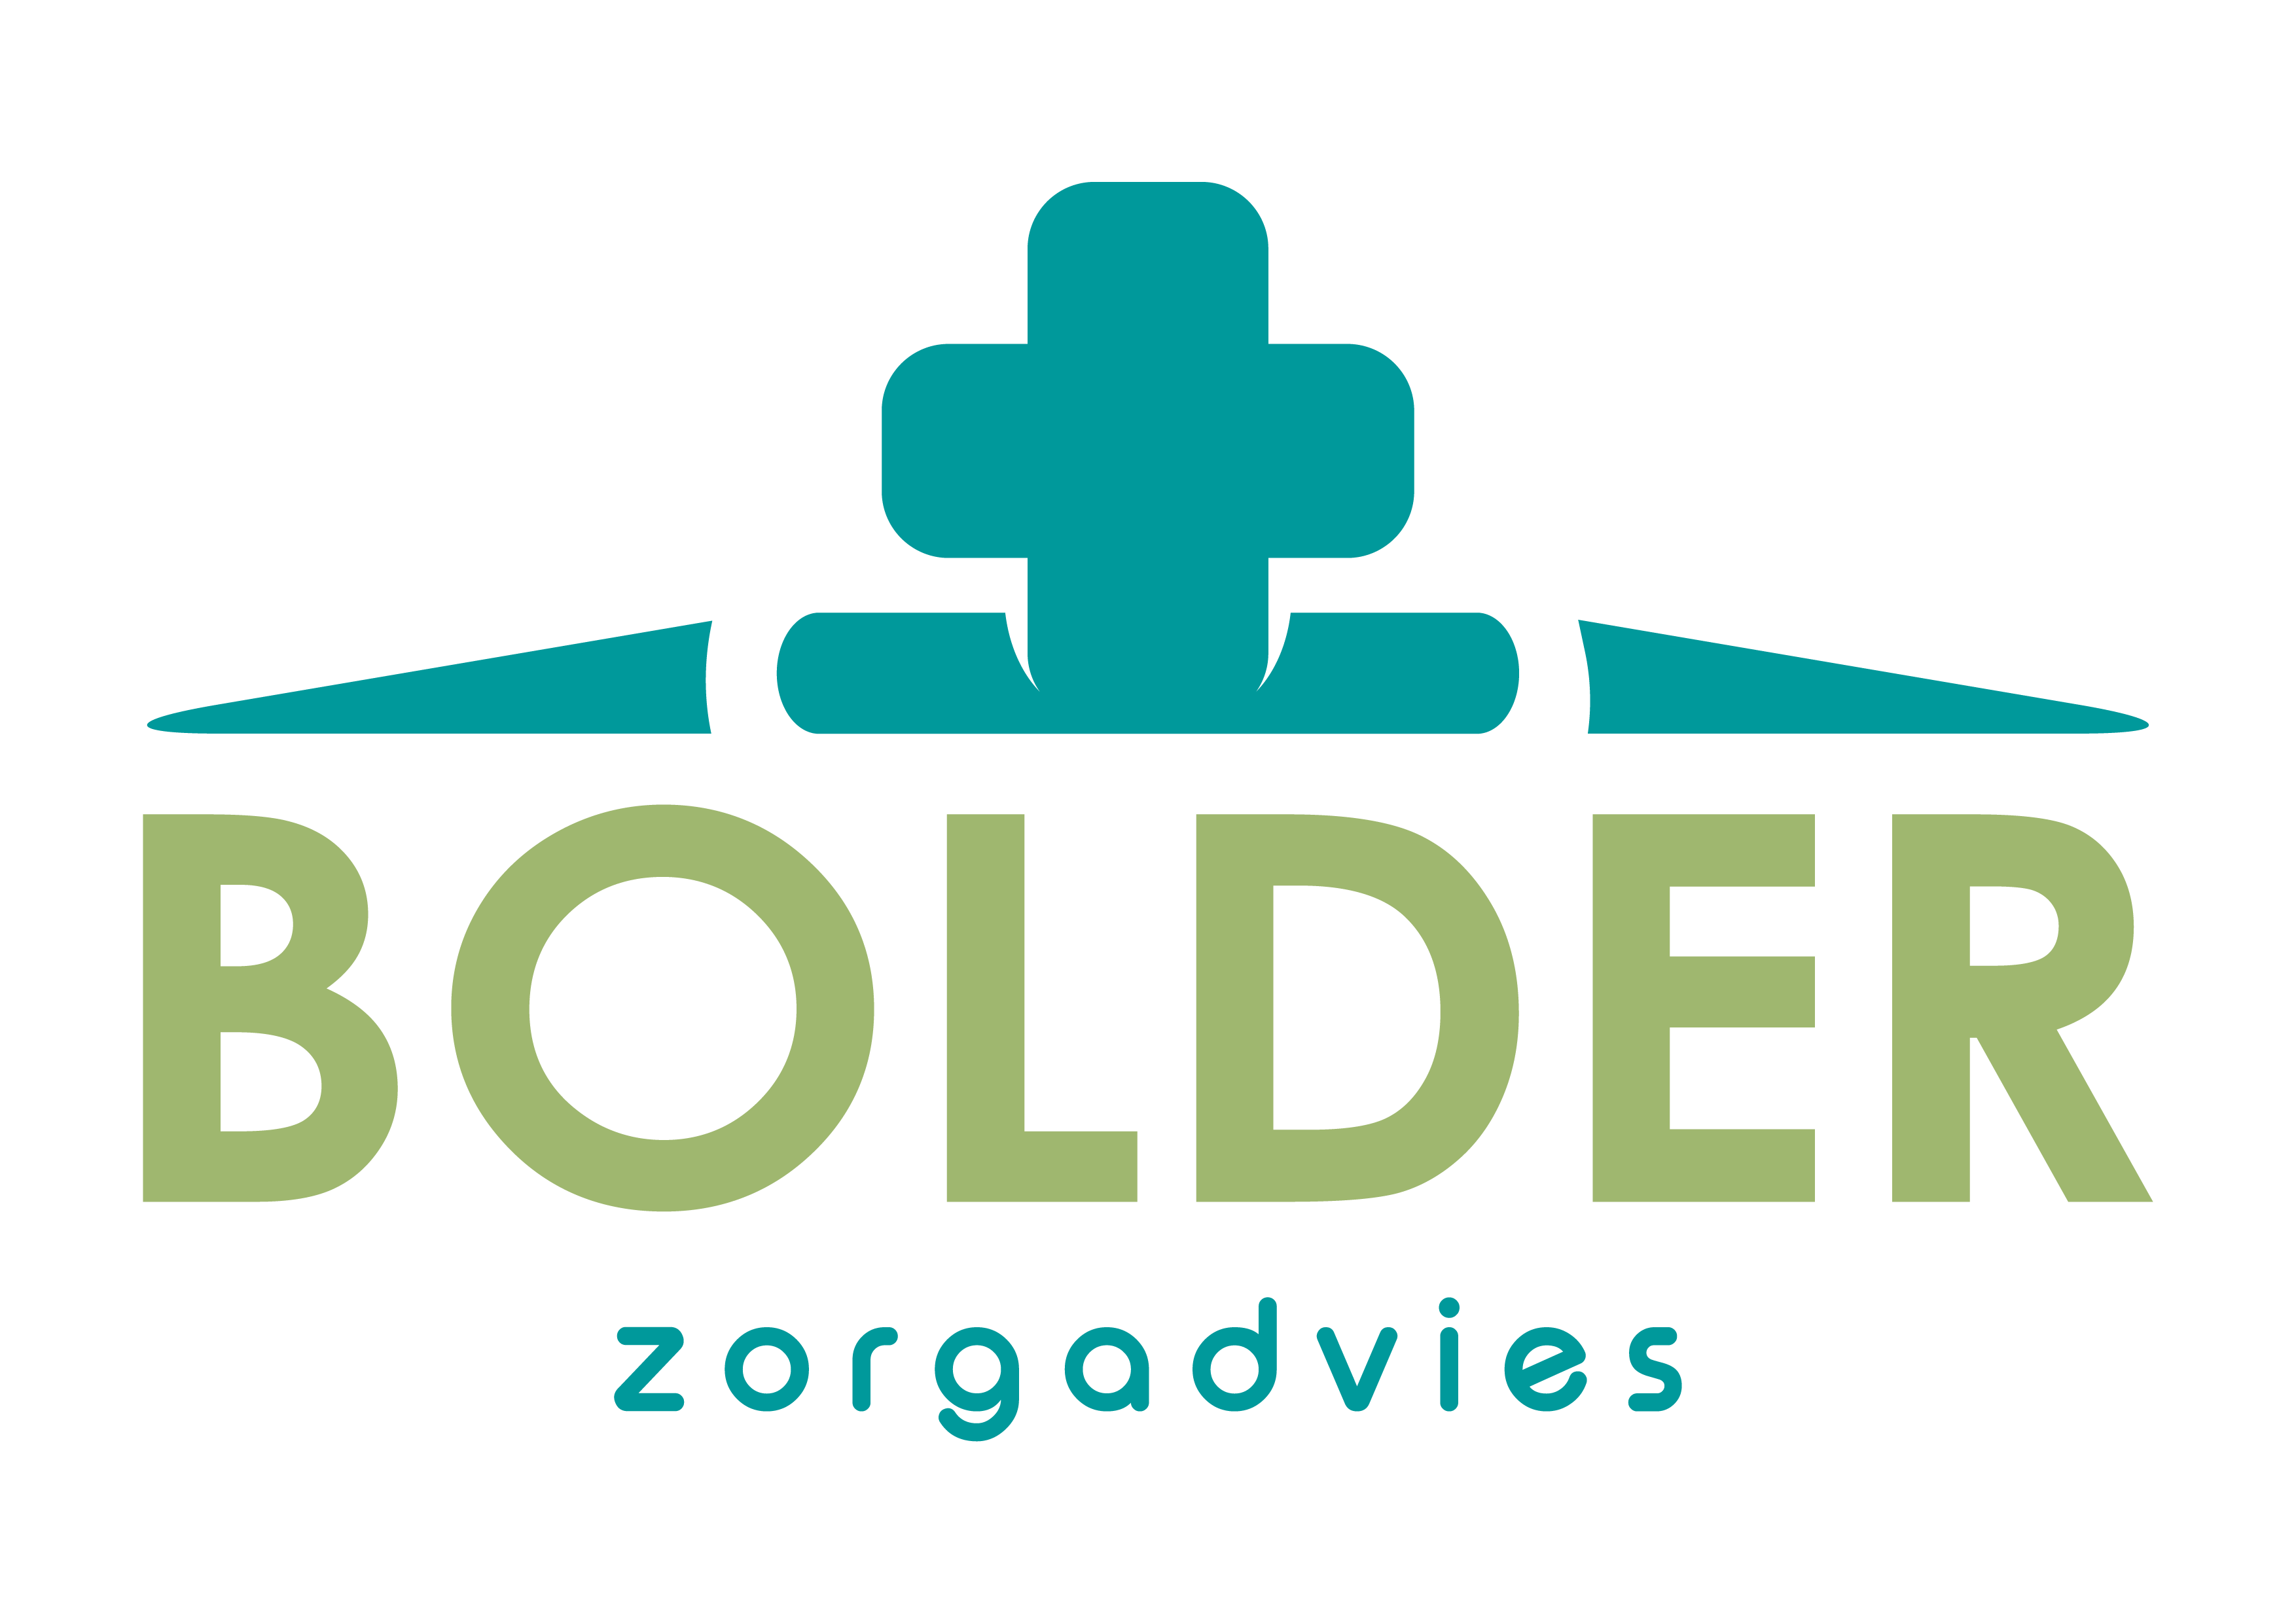 Bolder zorgadvies Logo